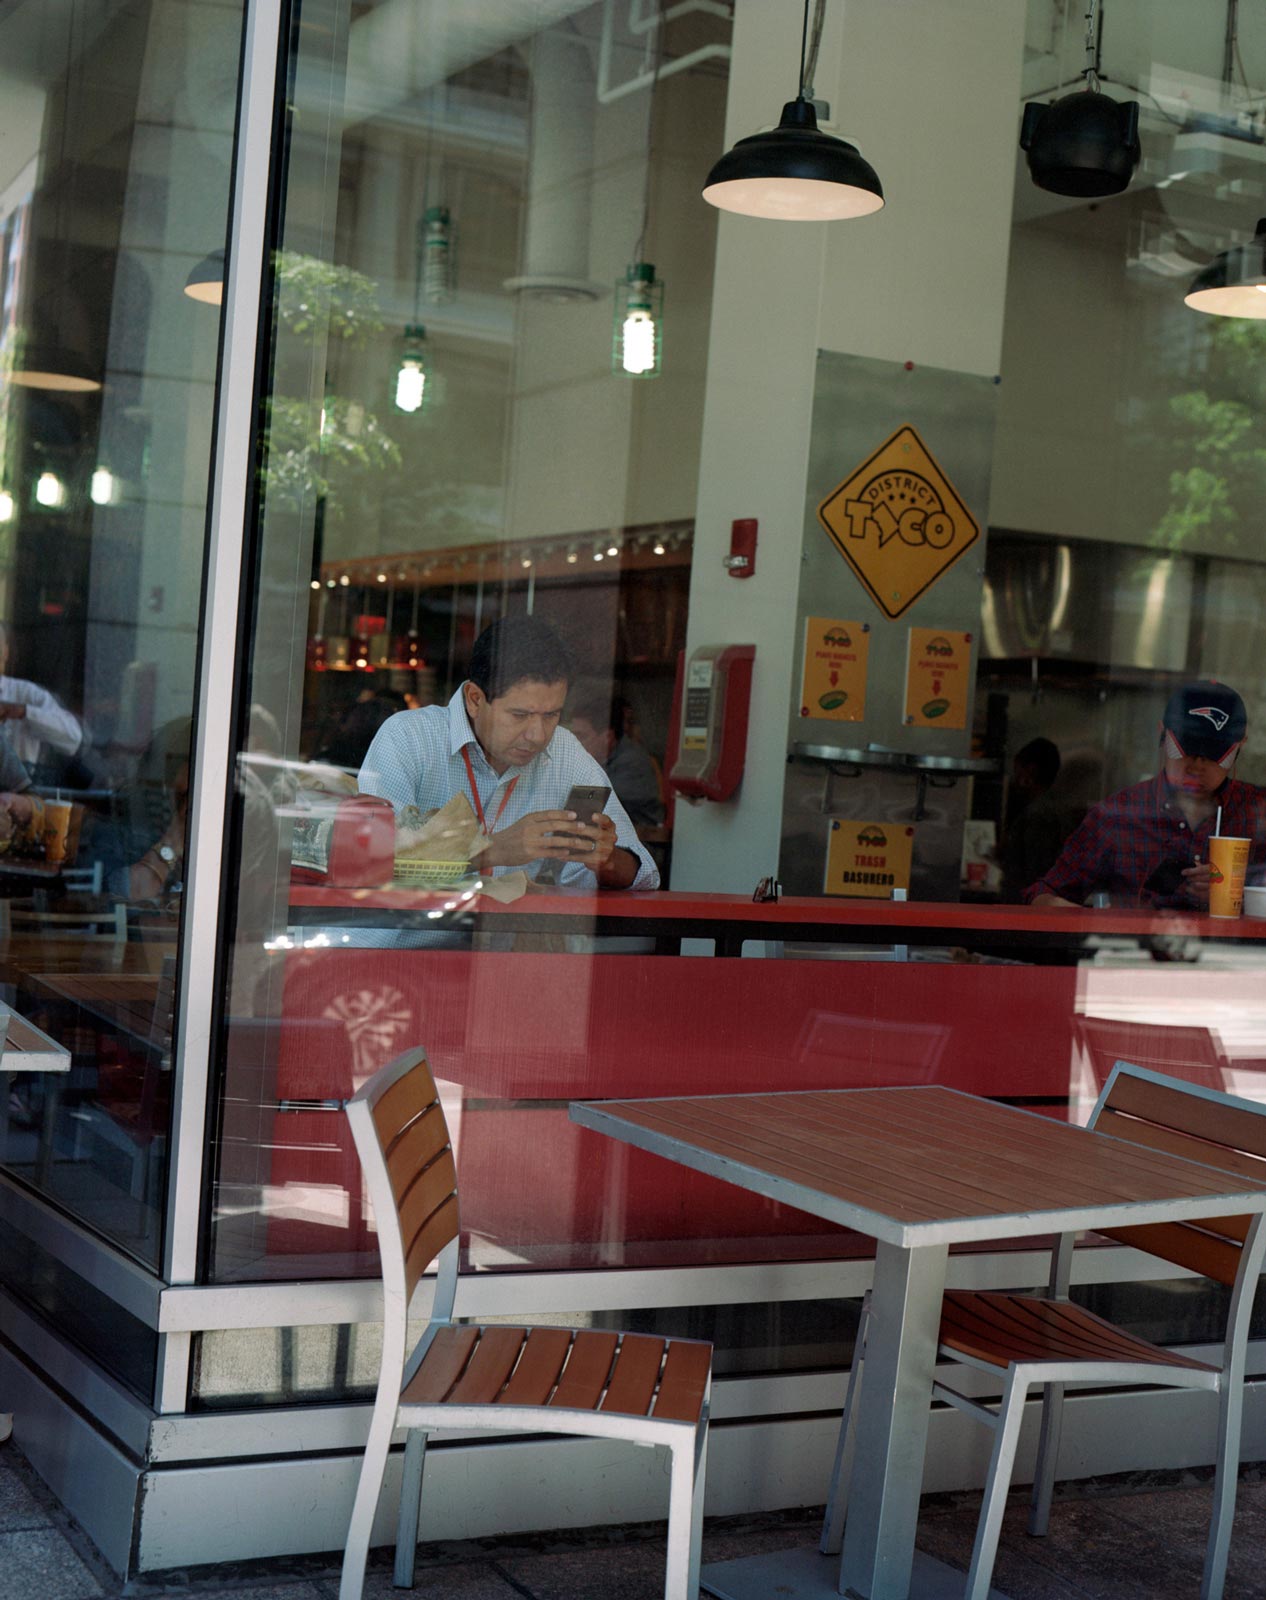 Man in a window eating lunch, Washington DC.